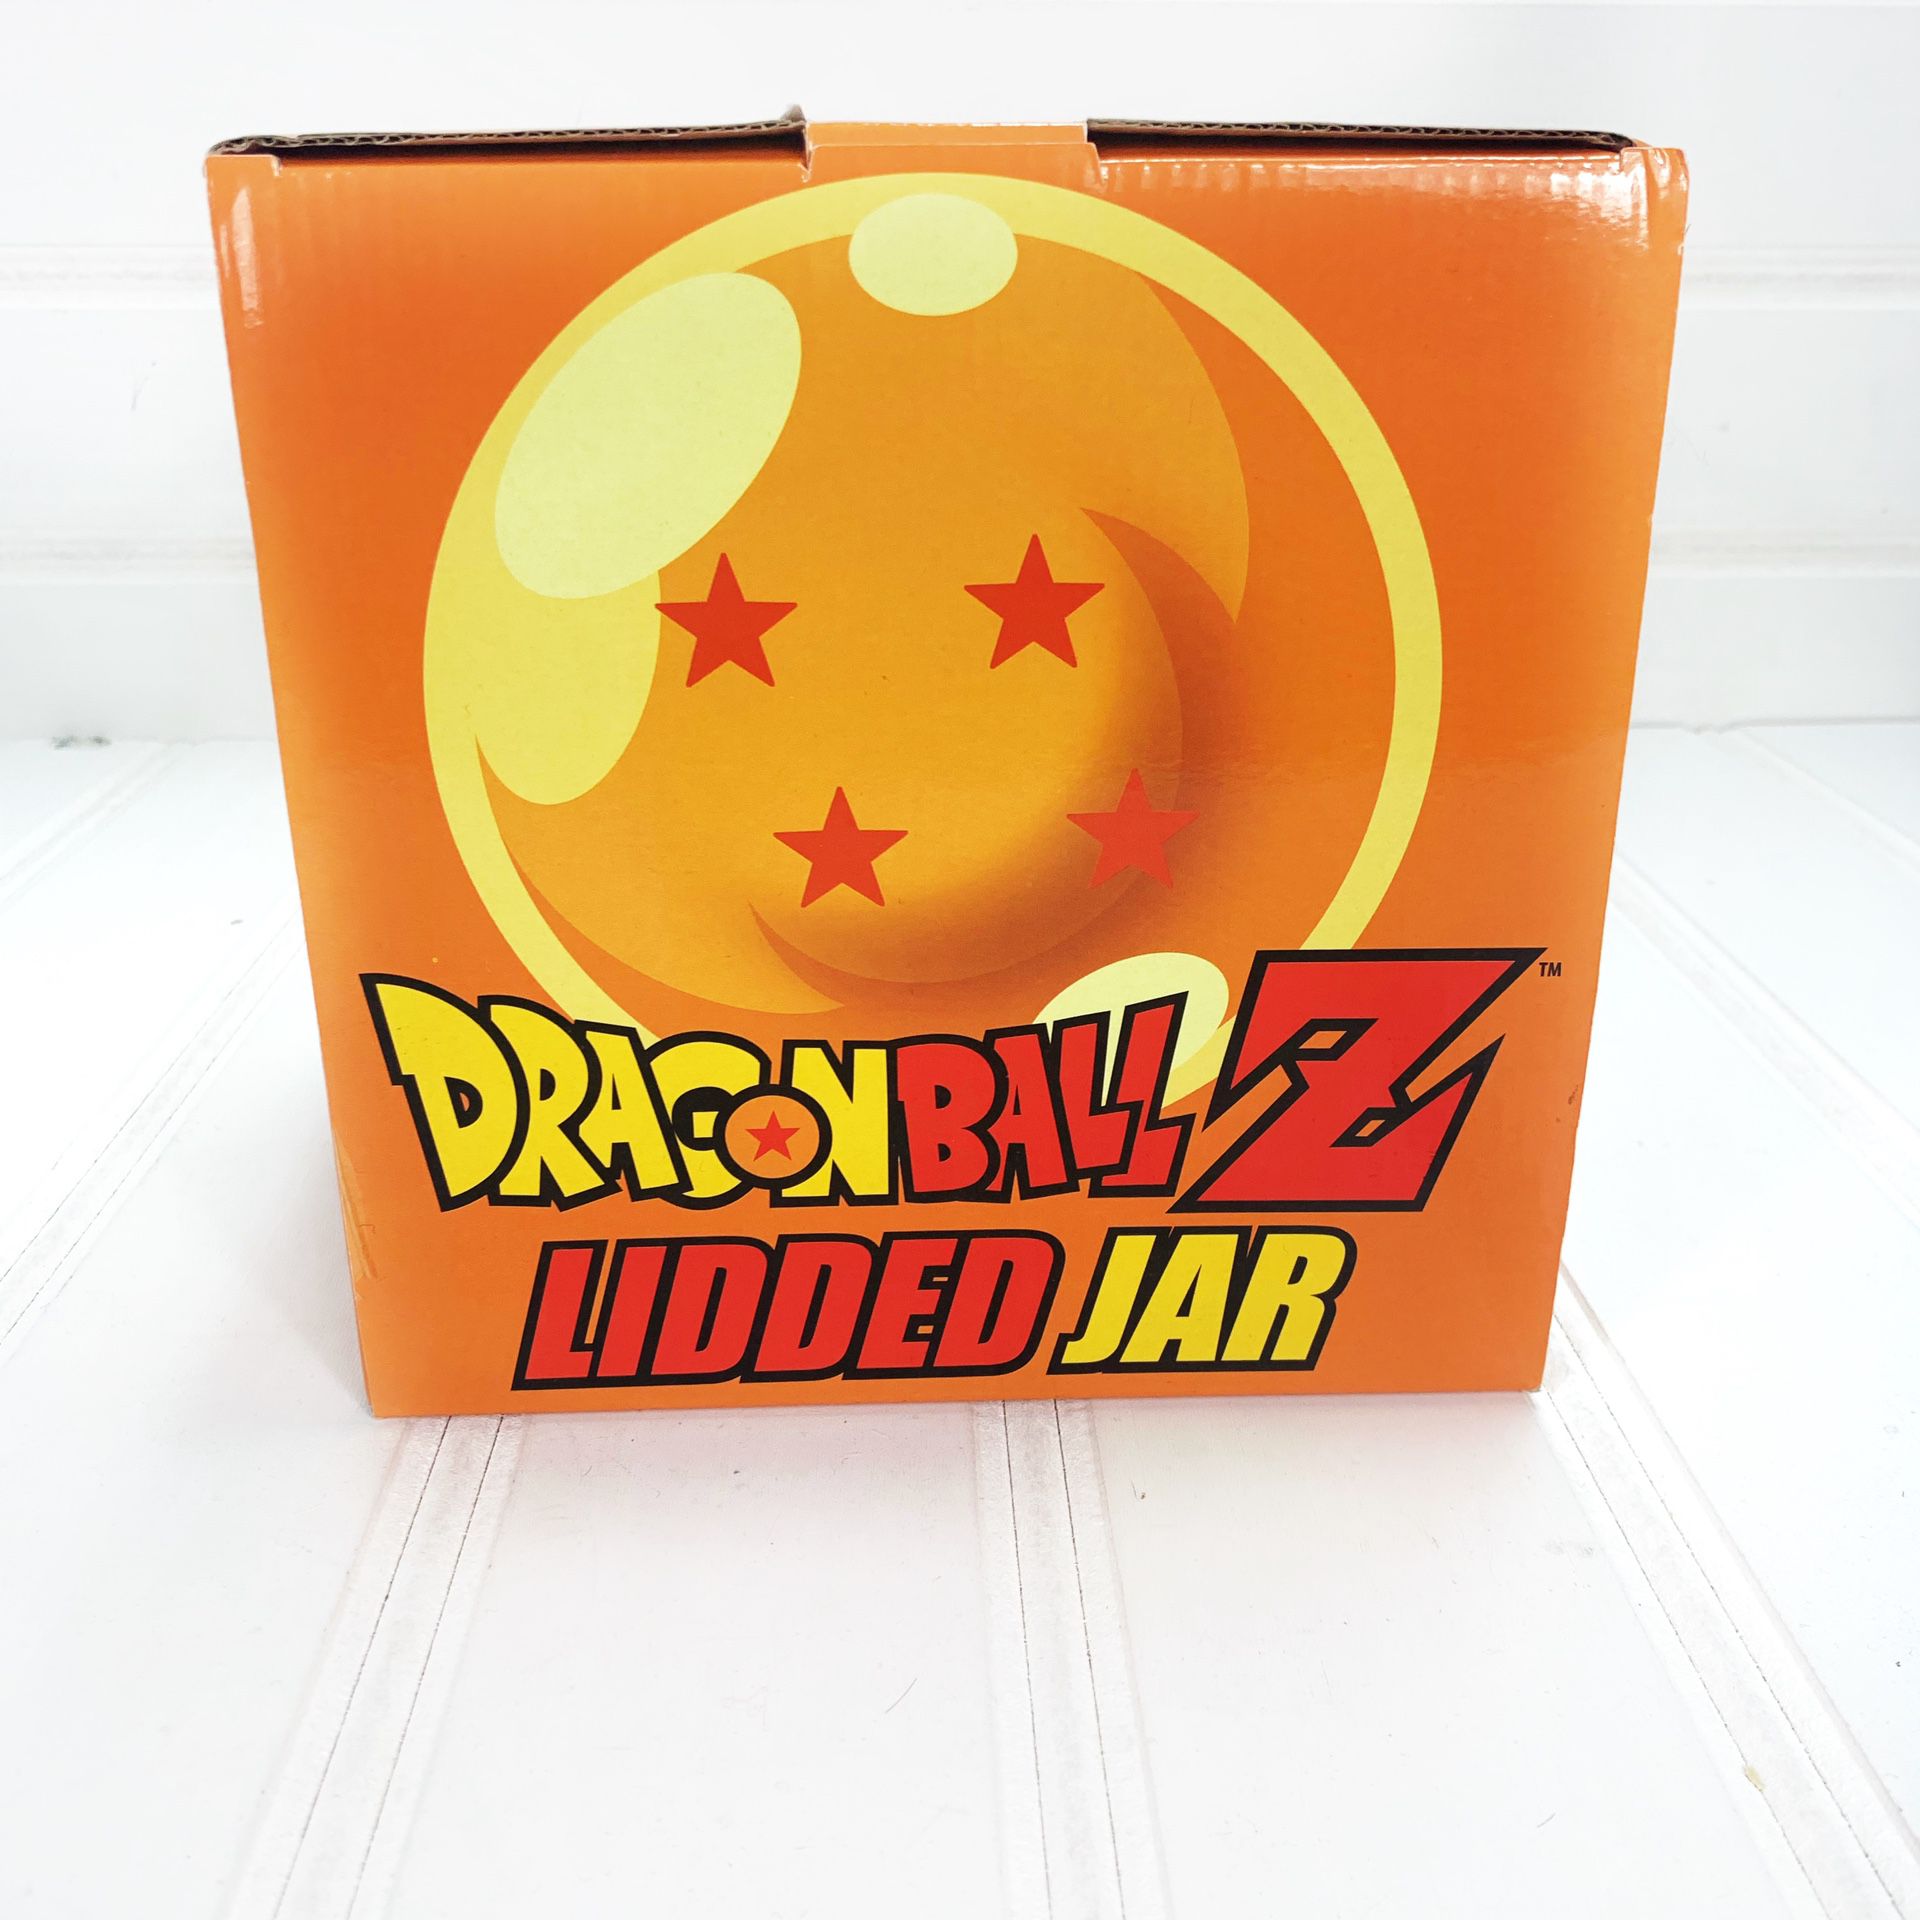 New Anime Dragonball Z 4 Star lidded orange cookie jar Collectible Dragon Ball